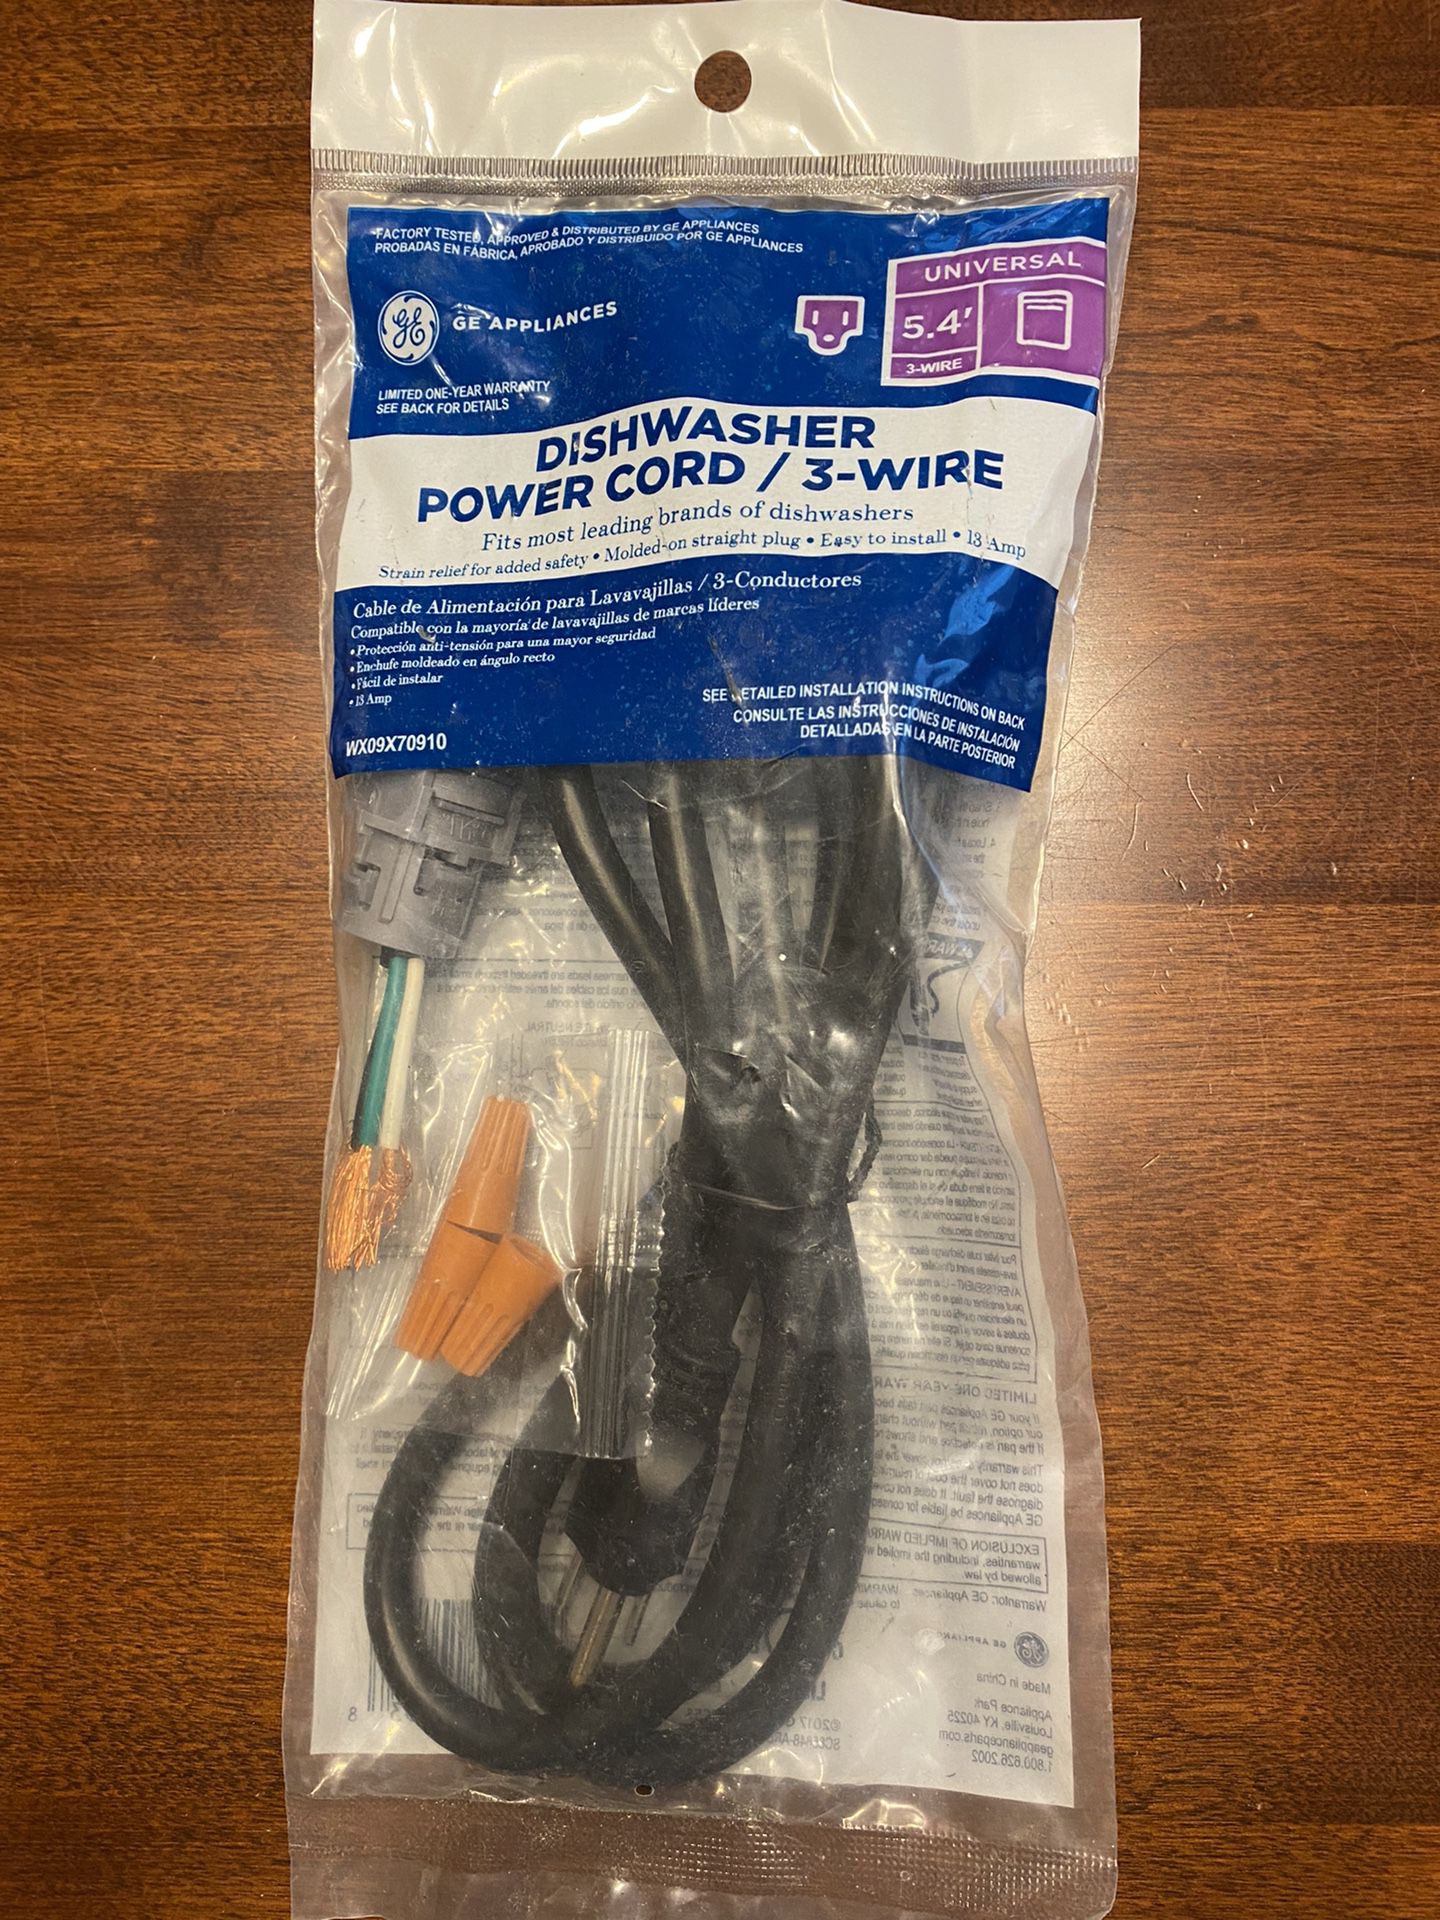 Dishwasher Power Cord 3-Wire